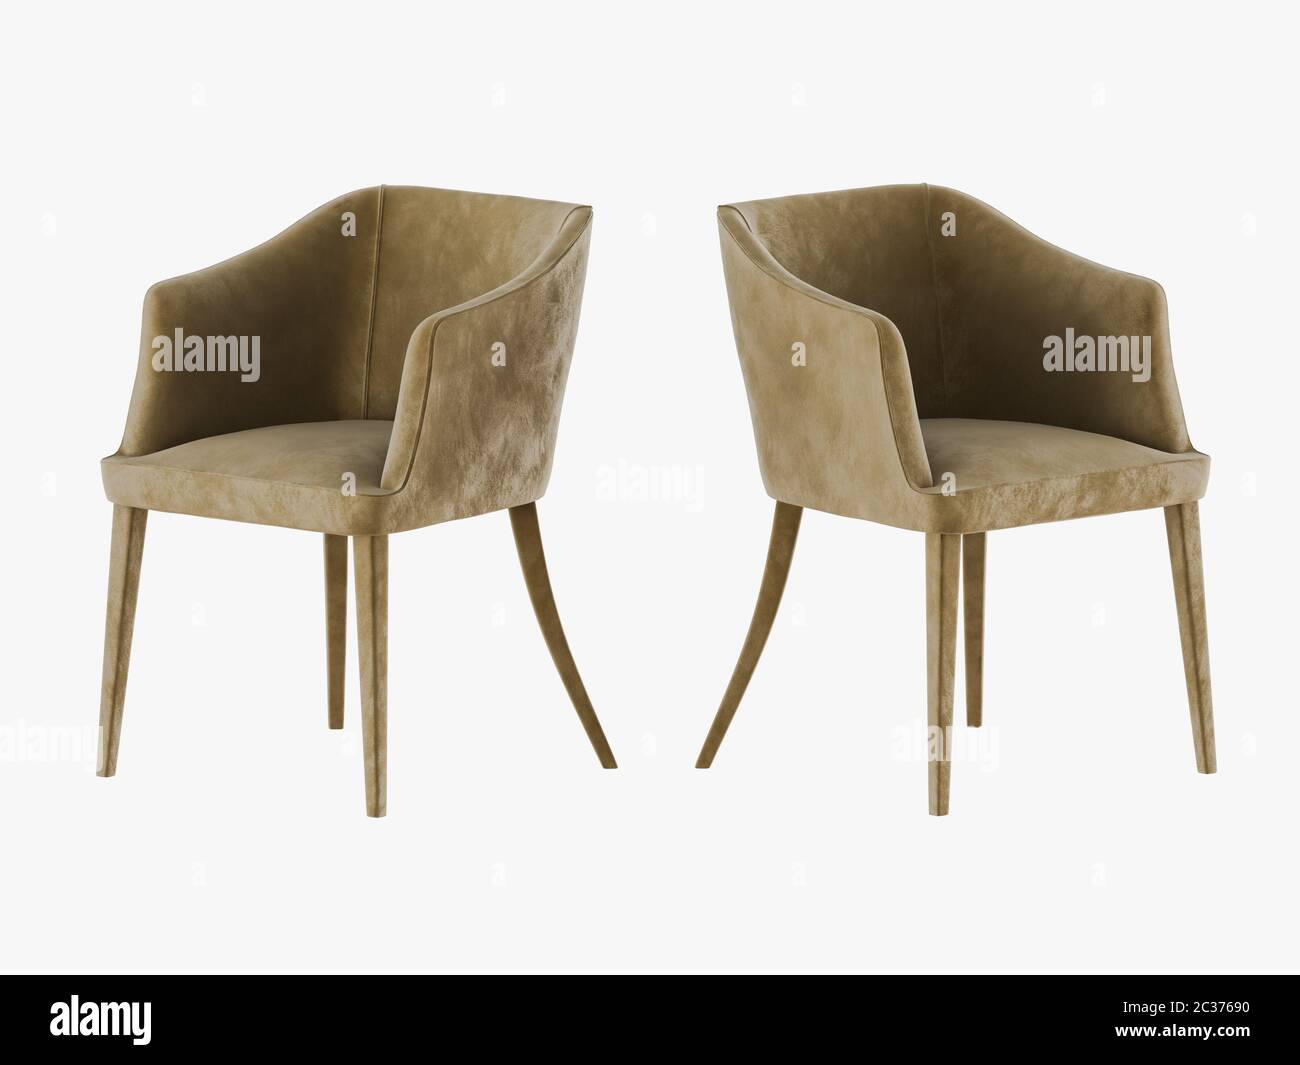 Two chair material velveteen 3d rendering Stock Photo